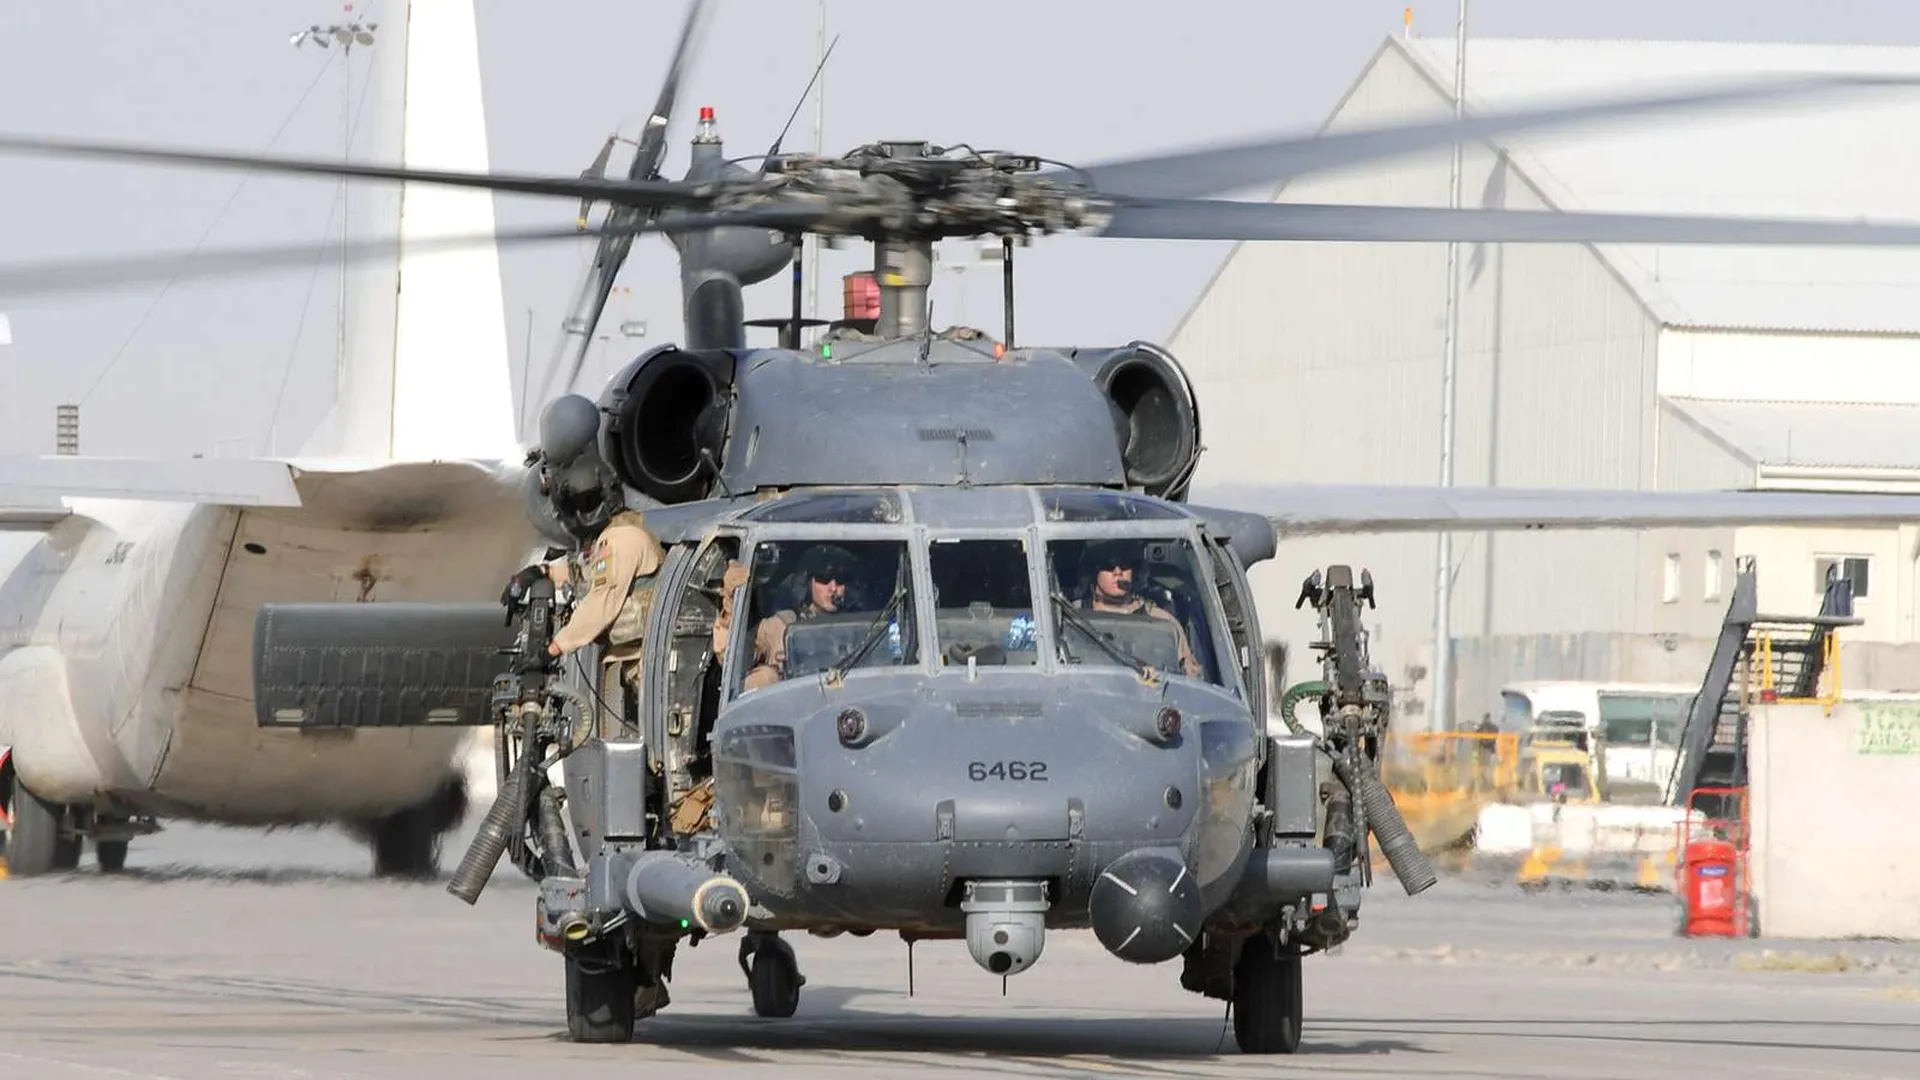 HH-60 Pave Hawk. Sikorsky HH-60 Pave Hawk. Мн-60g Pave Hawk. Sikorsky MH-60 Jayhawk. Вертолет сми